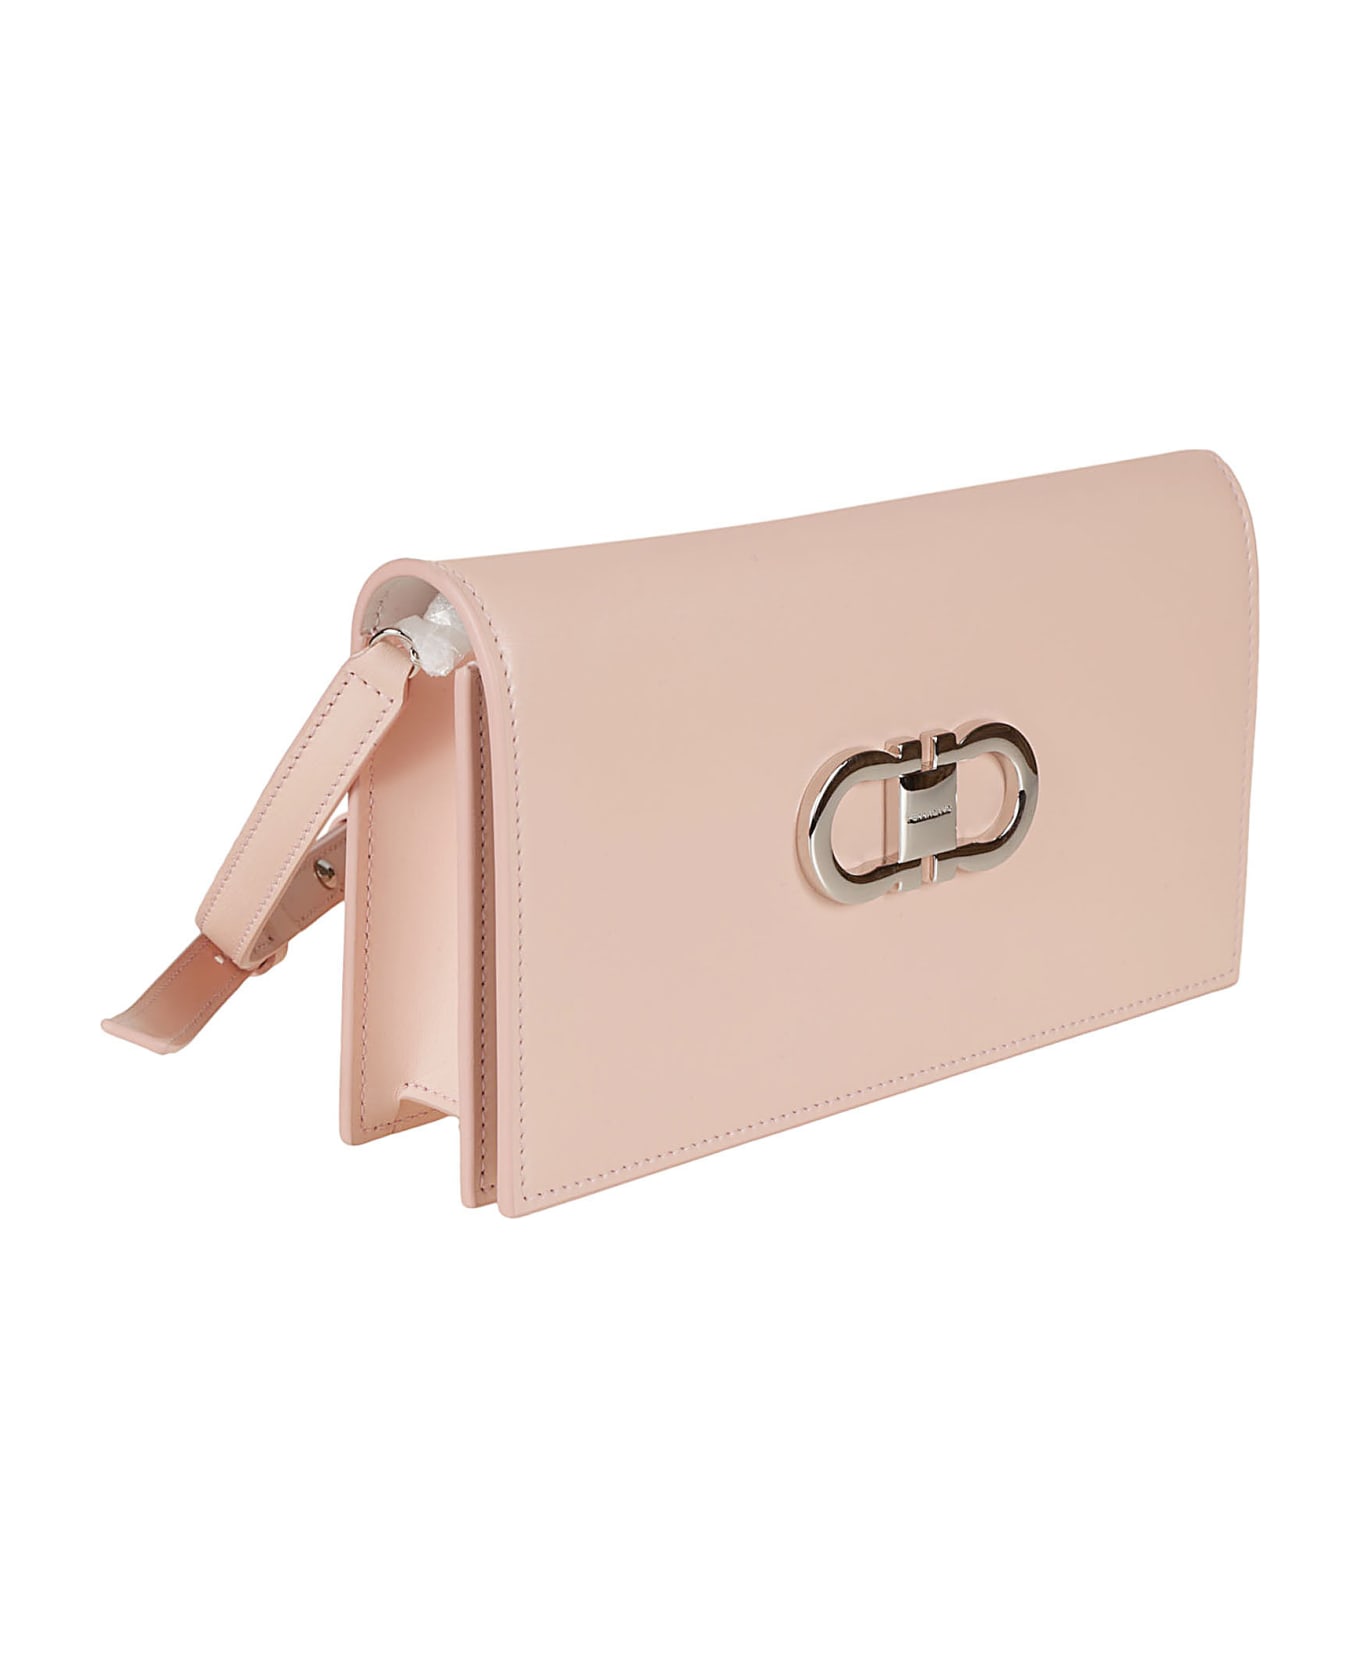 Ferragamo Gancini Plaque Shoulder Bag - Pink/Optic White